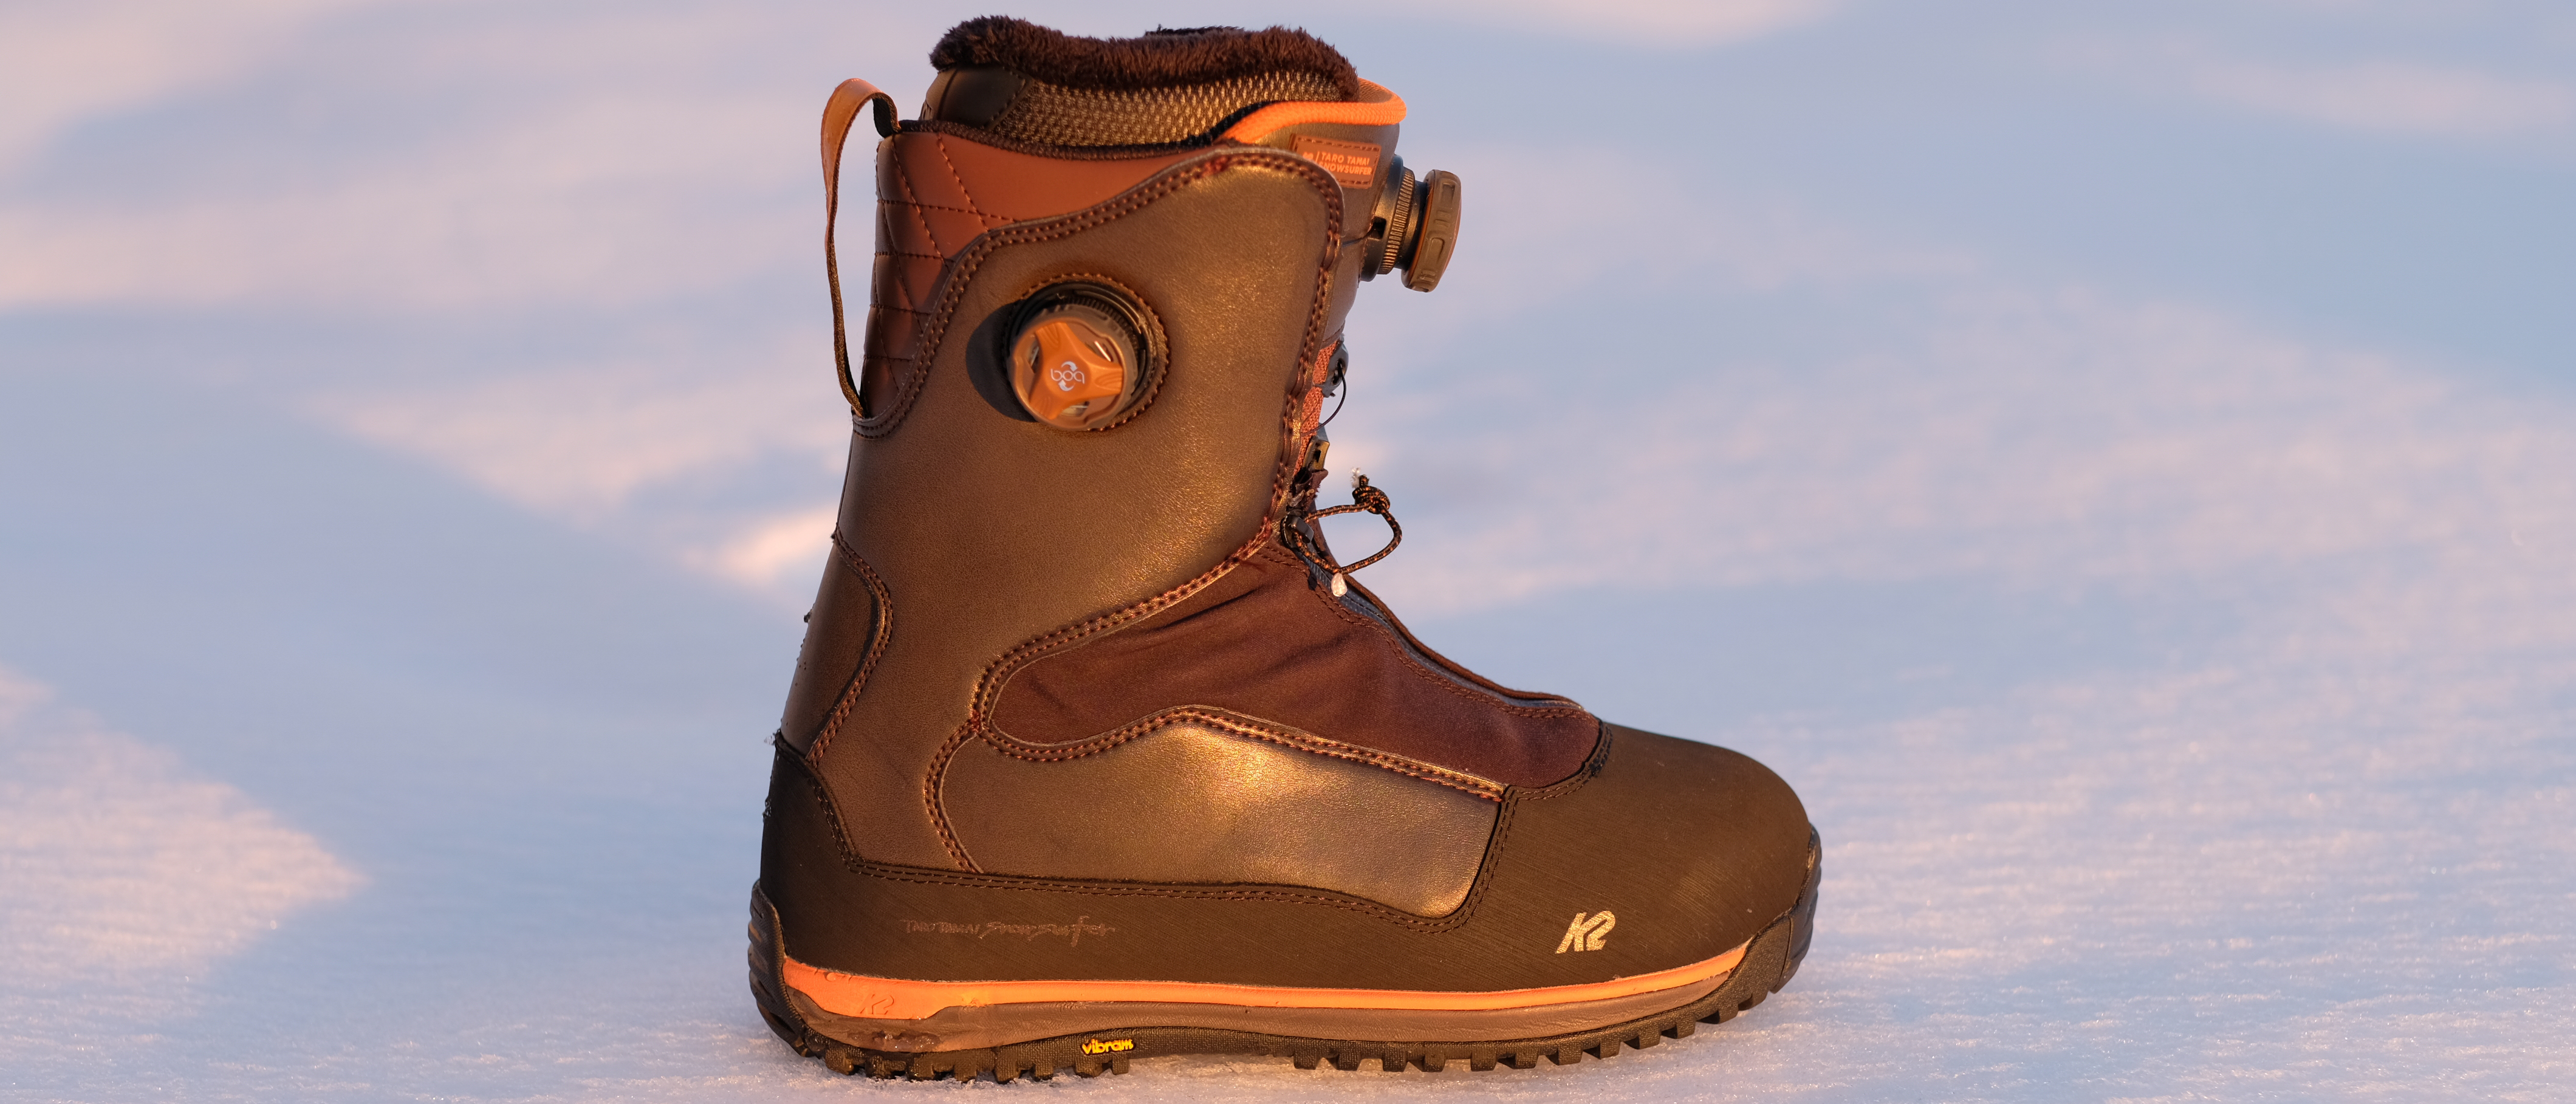 K2 Taro Tamai Snowsurfer boot featured image